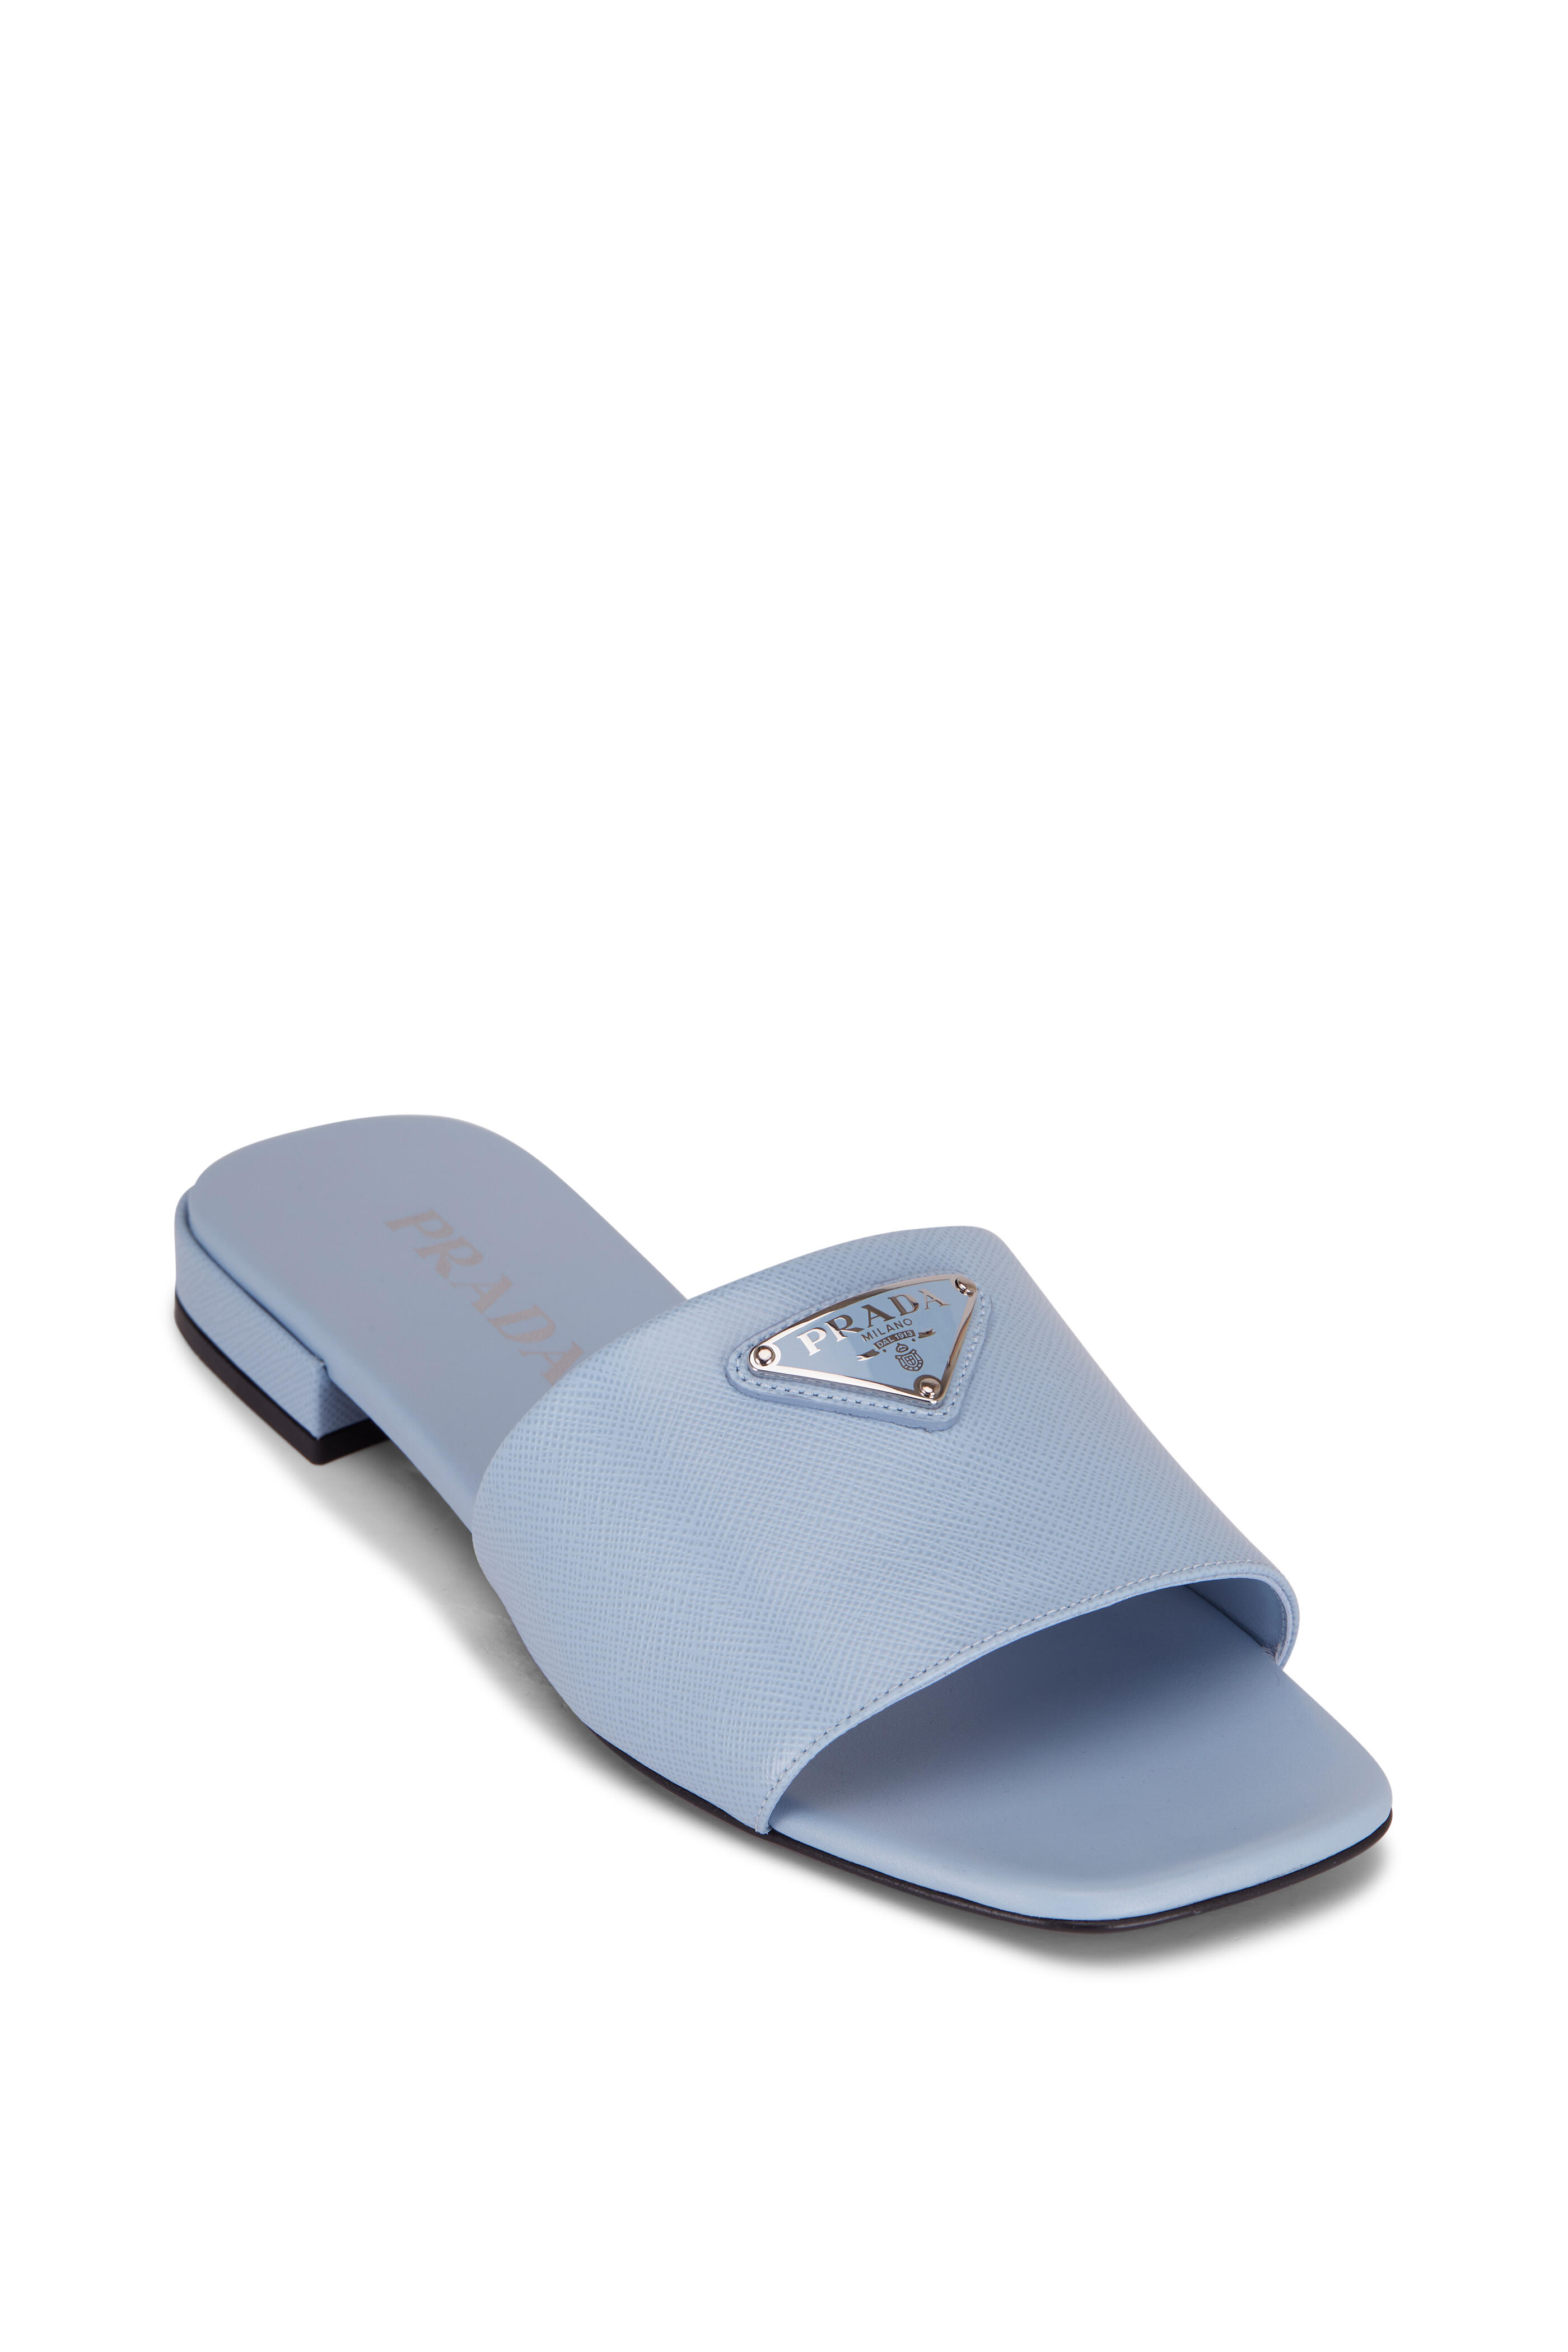 Prada - Celeste Saffiano Leather Flat Sandal | Mitchell Stores